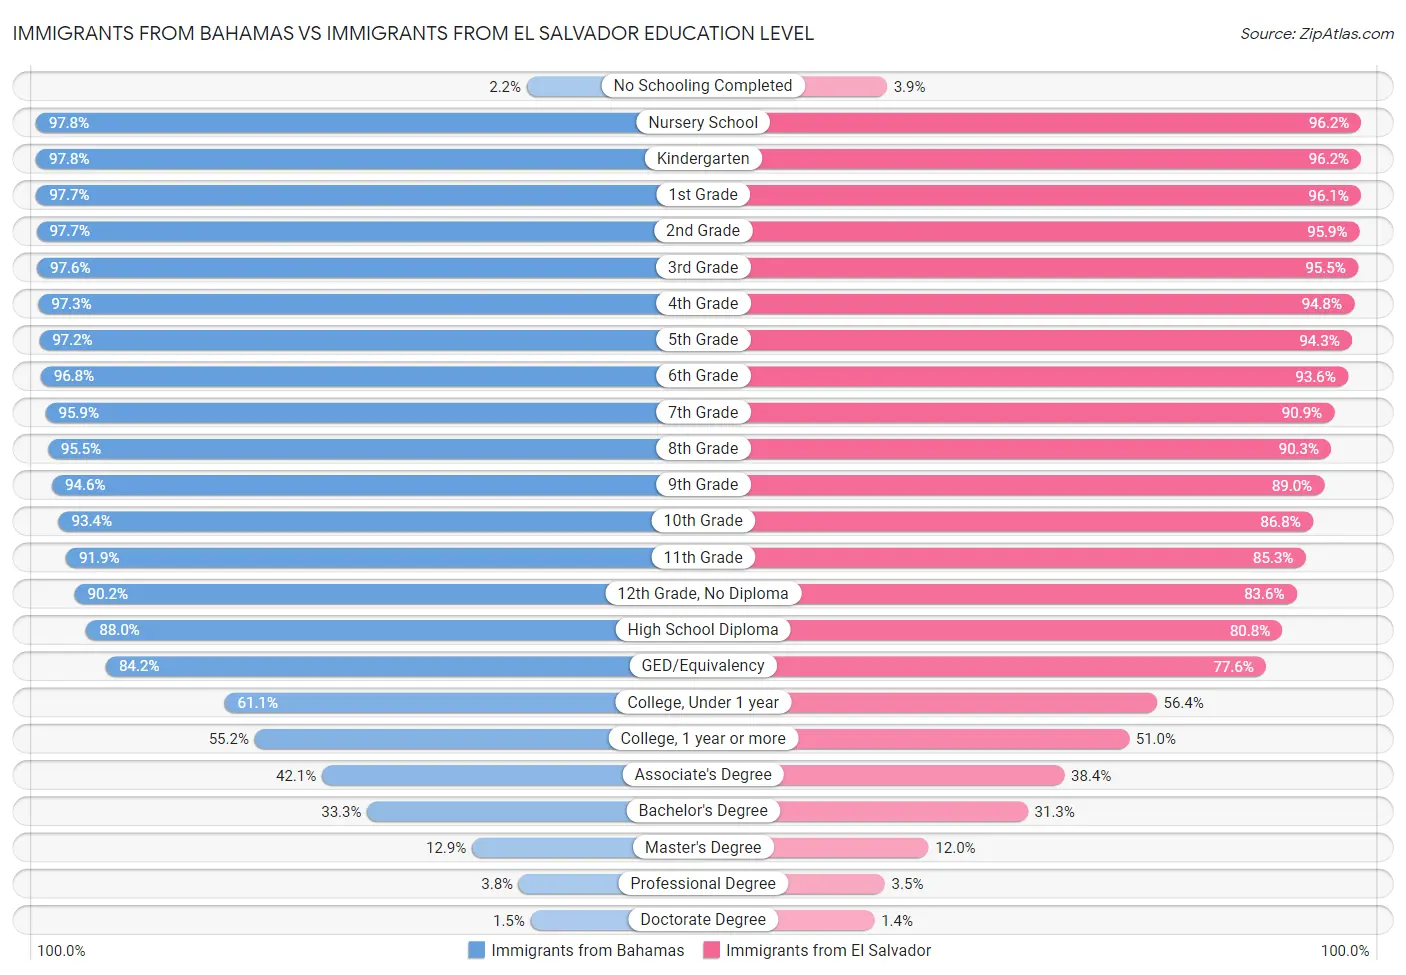 Immigrants from Bahamas vs Immigrants from El Salvador Education Level